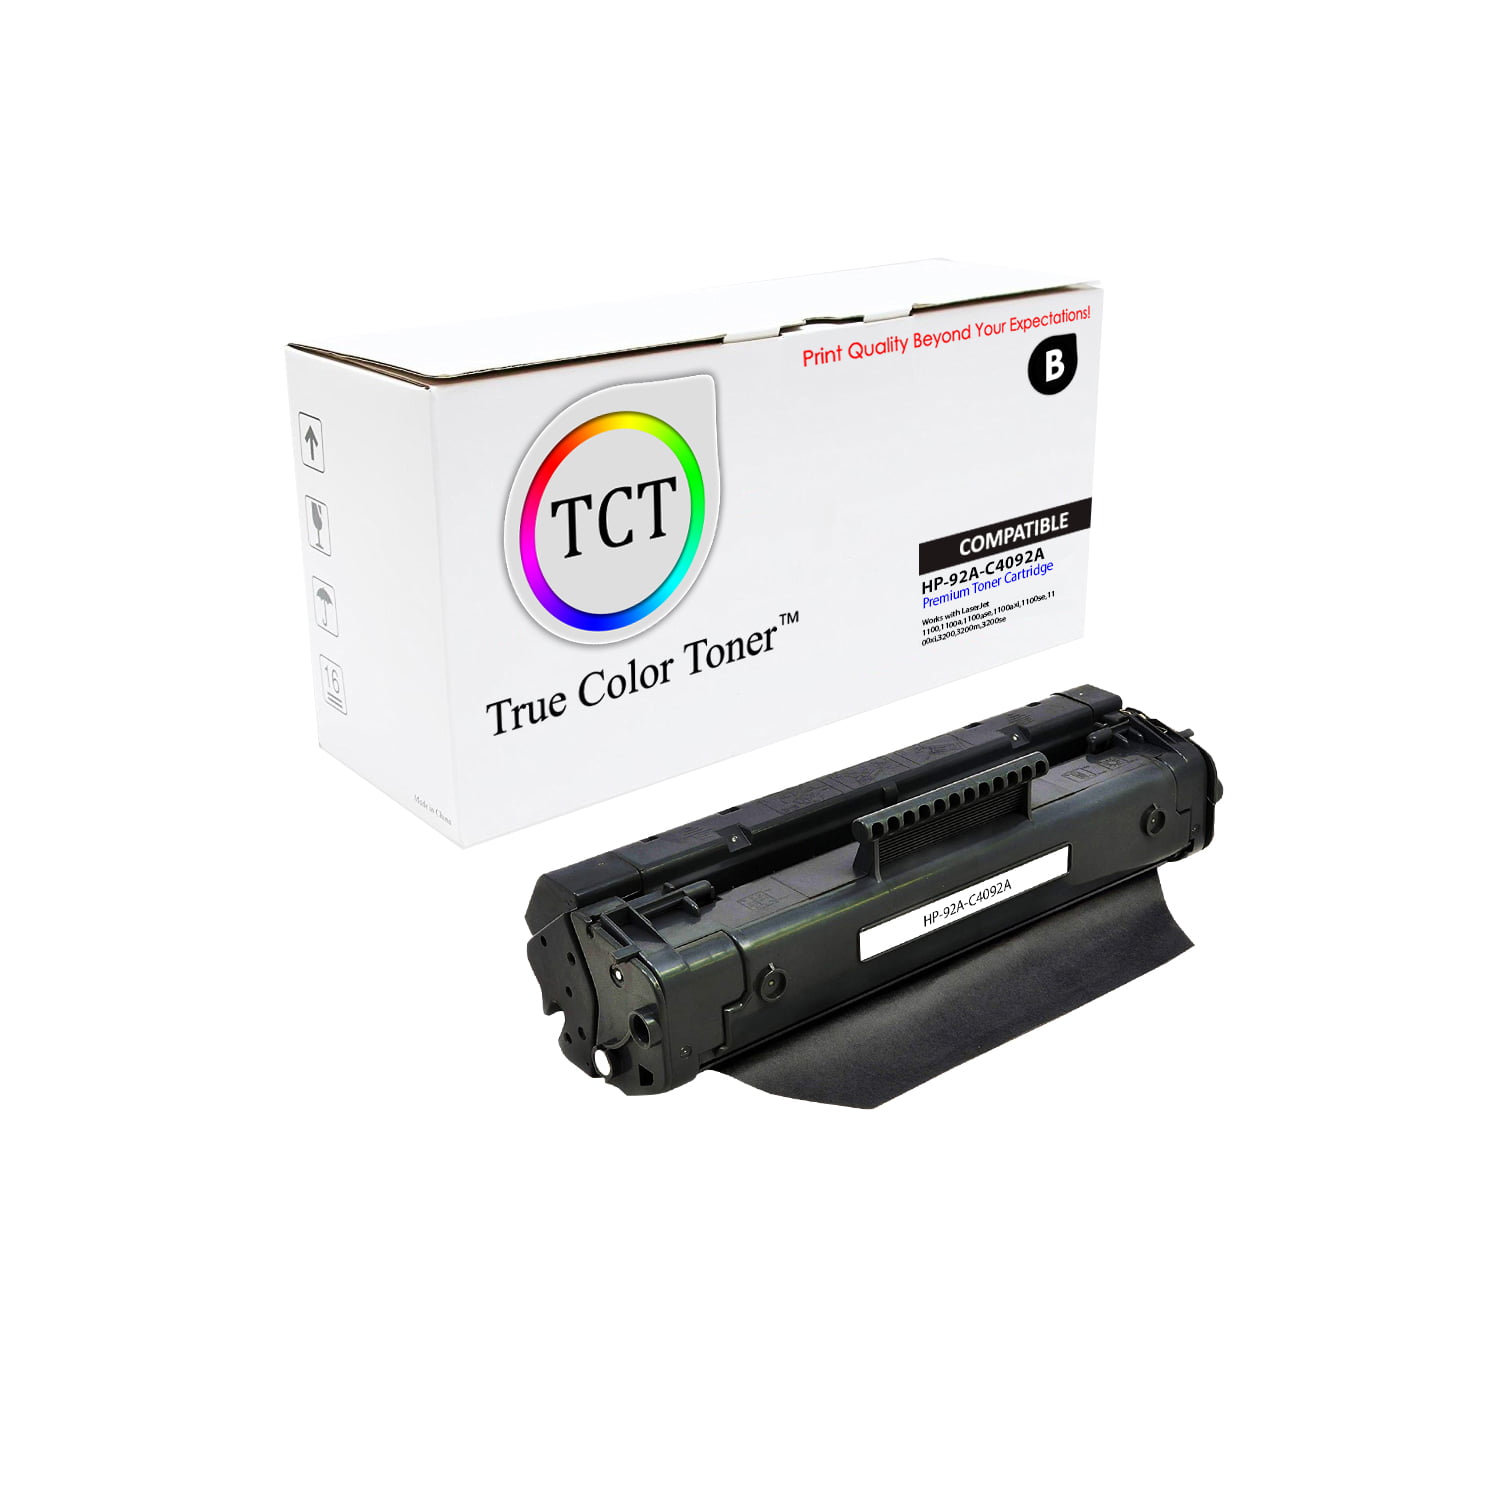 Fabel trog Over het algemeen TCT Premium Compatible Toner Cartridge Replacement for HP 92A C4092A Black  works with HP LaserJet 1100 1100A 1100A-SE 1100A-XI 1100SE 1100XI, 3200  3200M 3200SE Printers (2,500 Pages) - Walmart.com